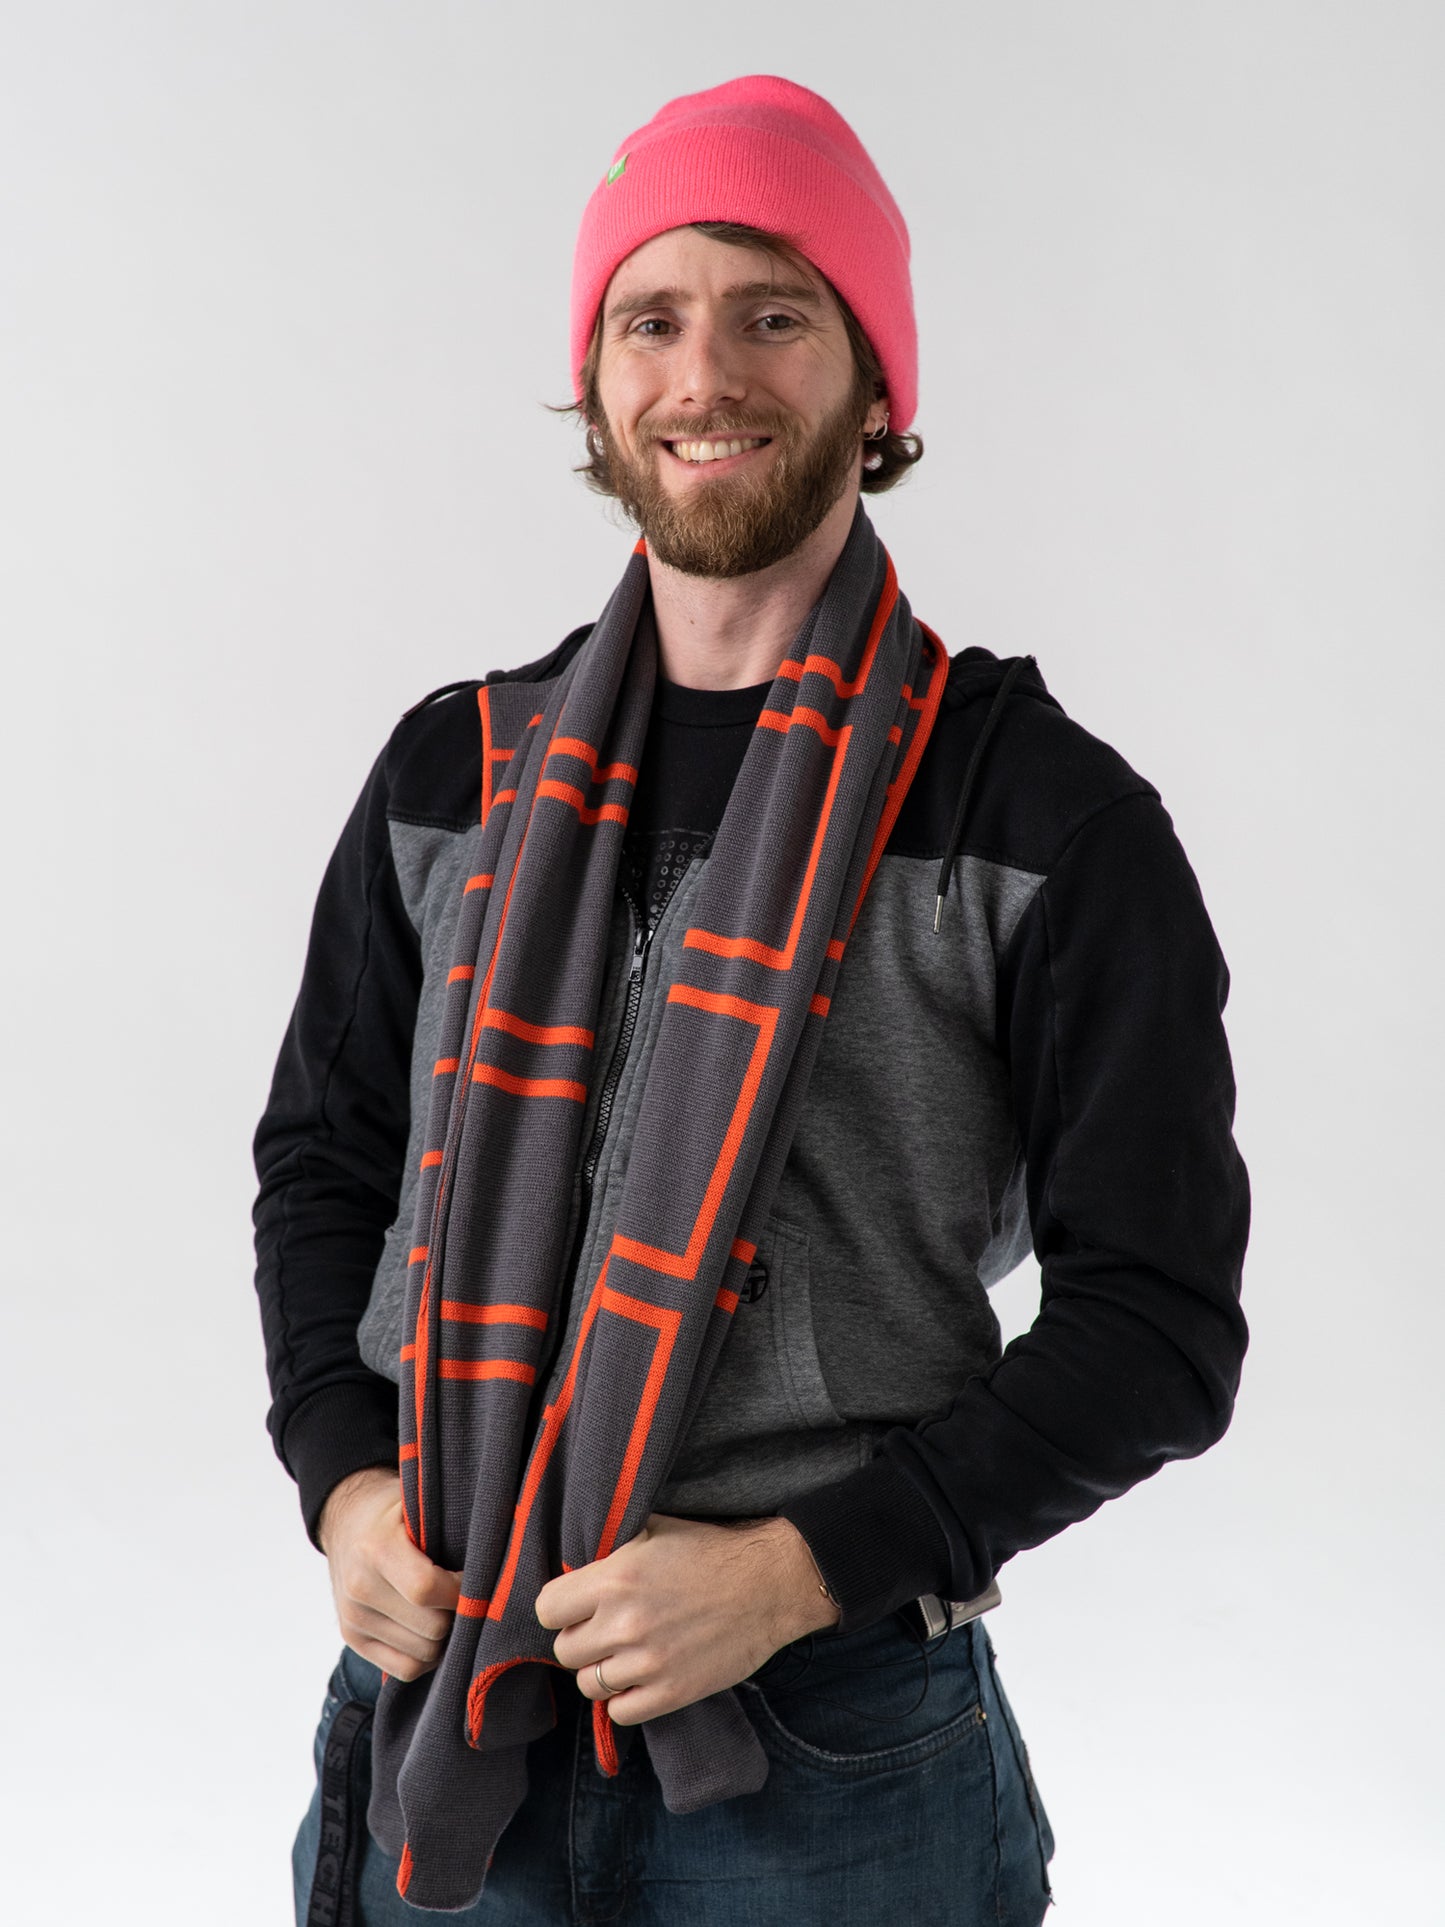 Tech scarfs